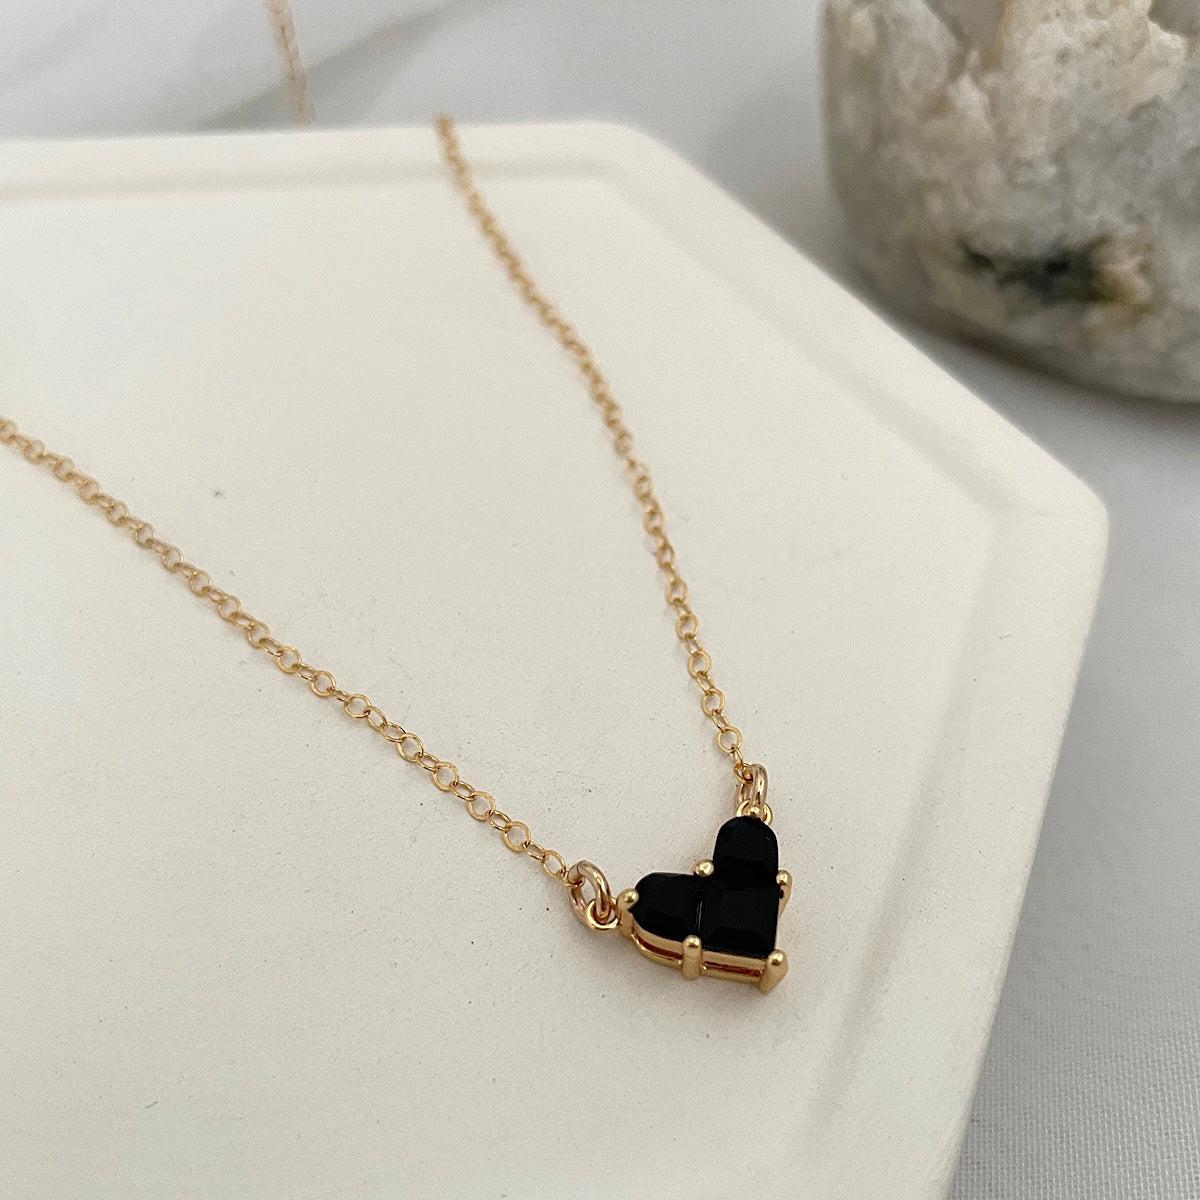 Little Black Heart Necklace